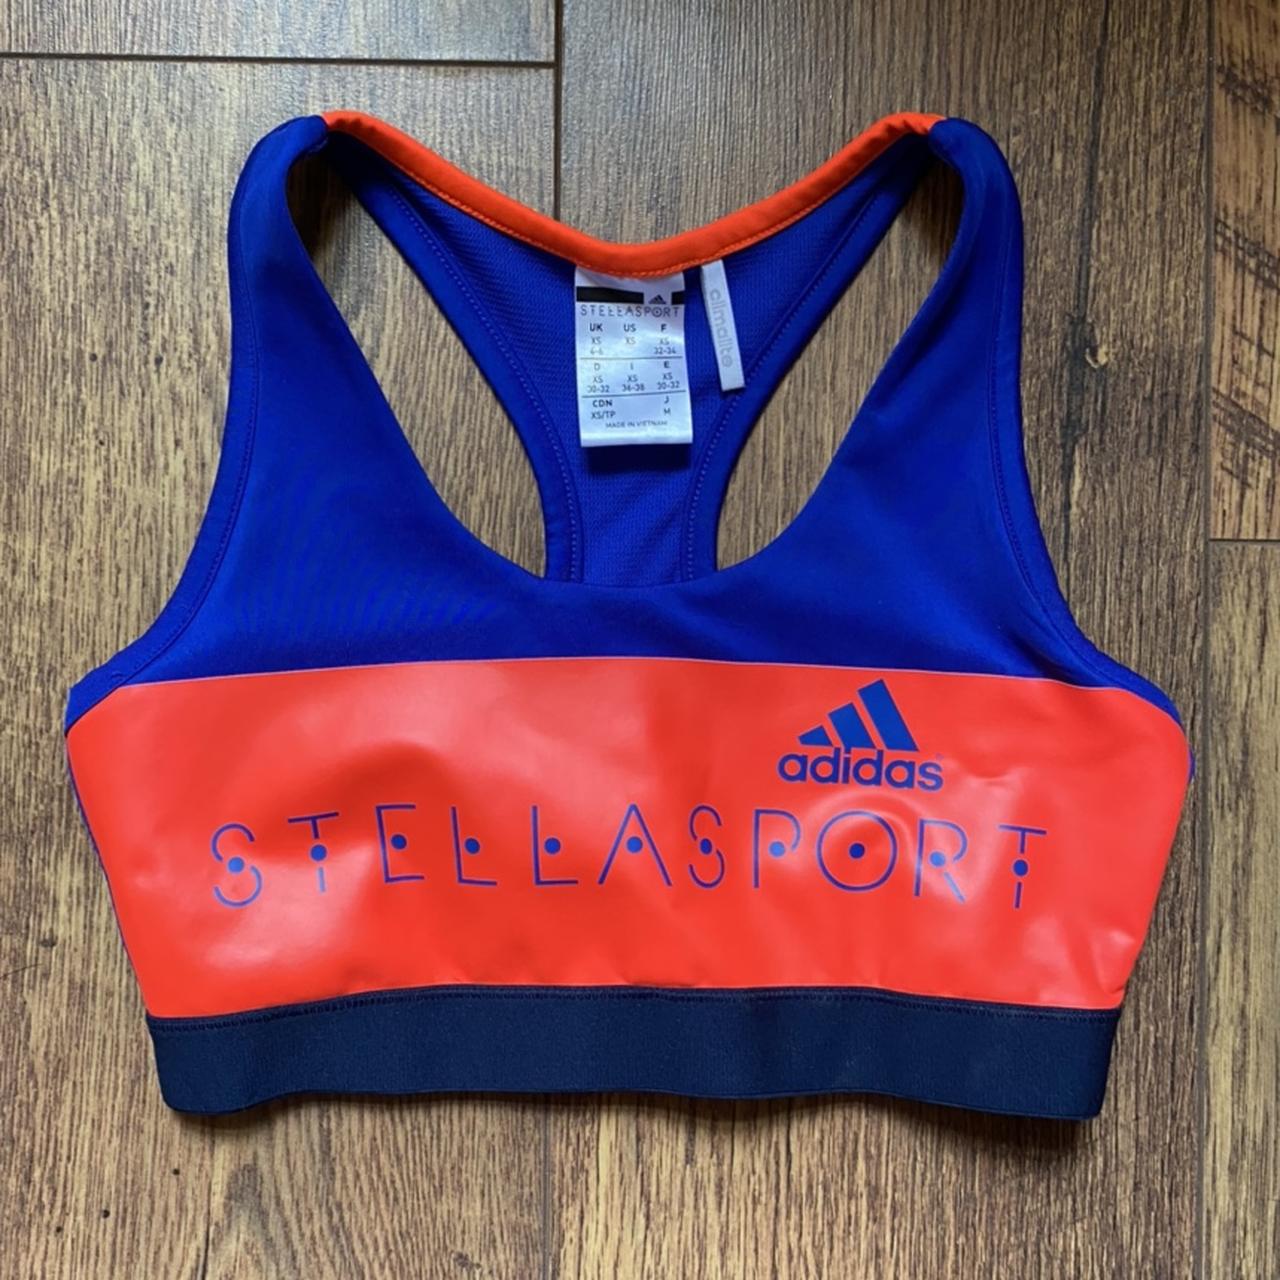 Gorgeous Adidas x Stella sport sports bra in blue - Depop